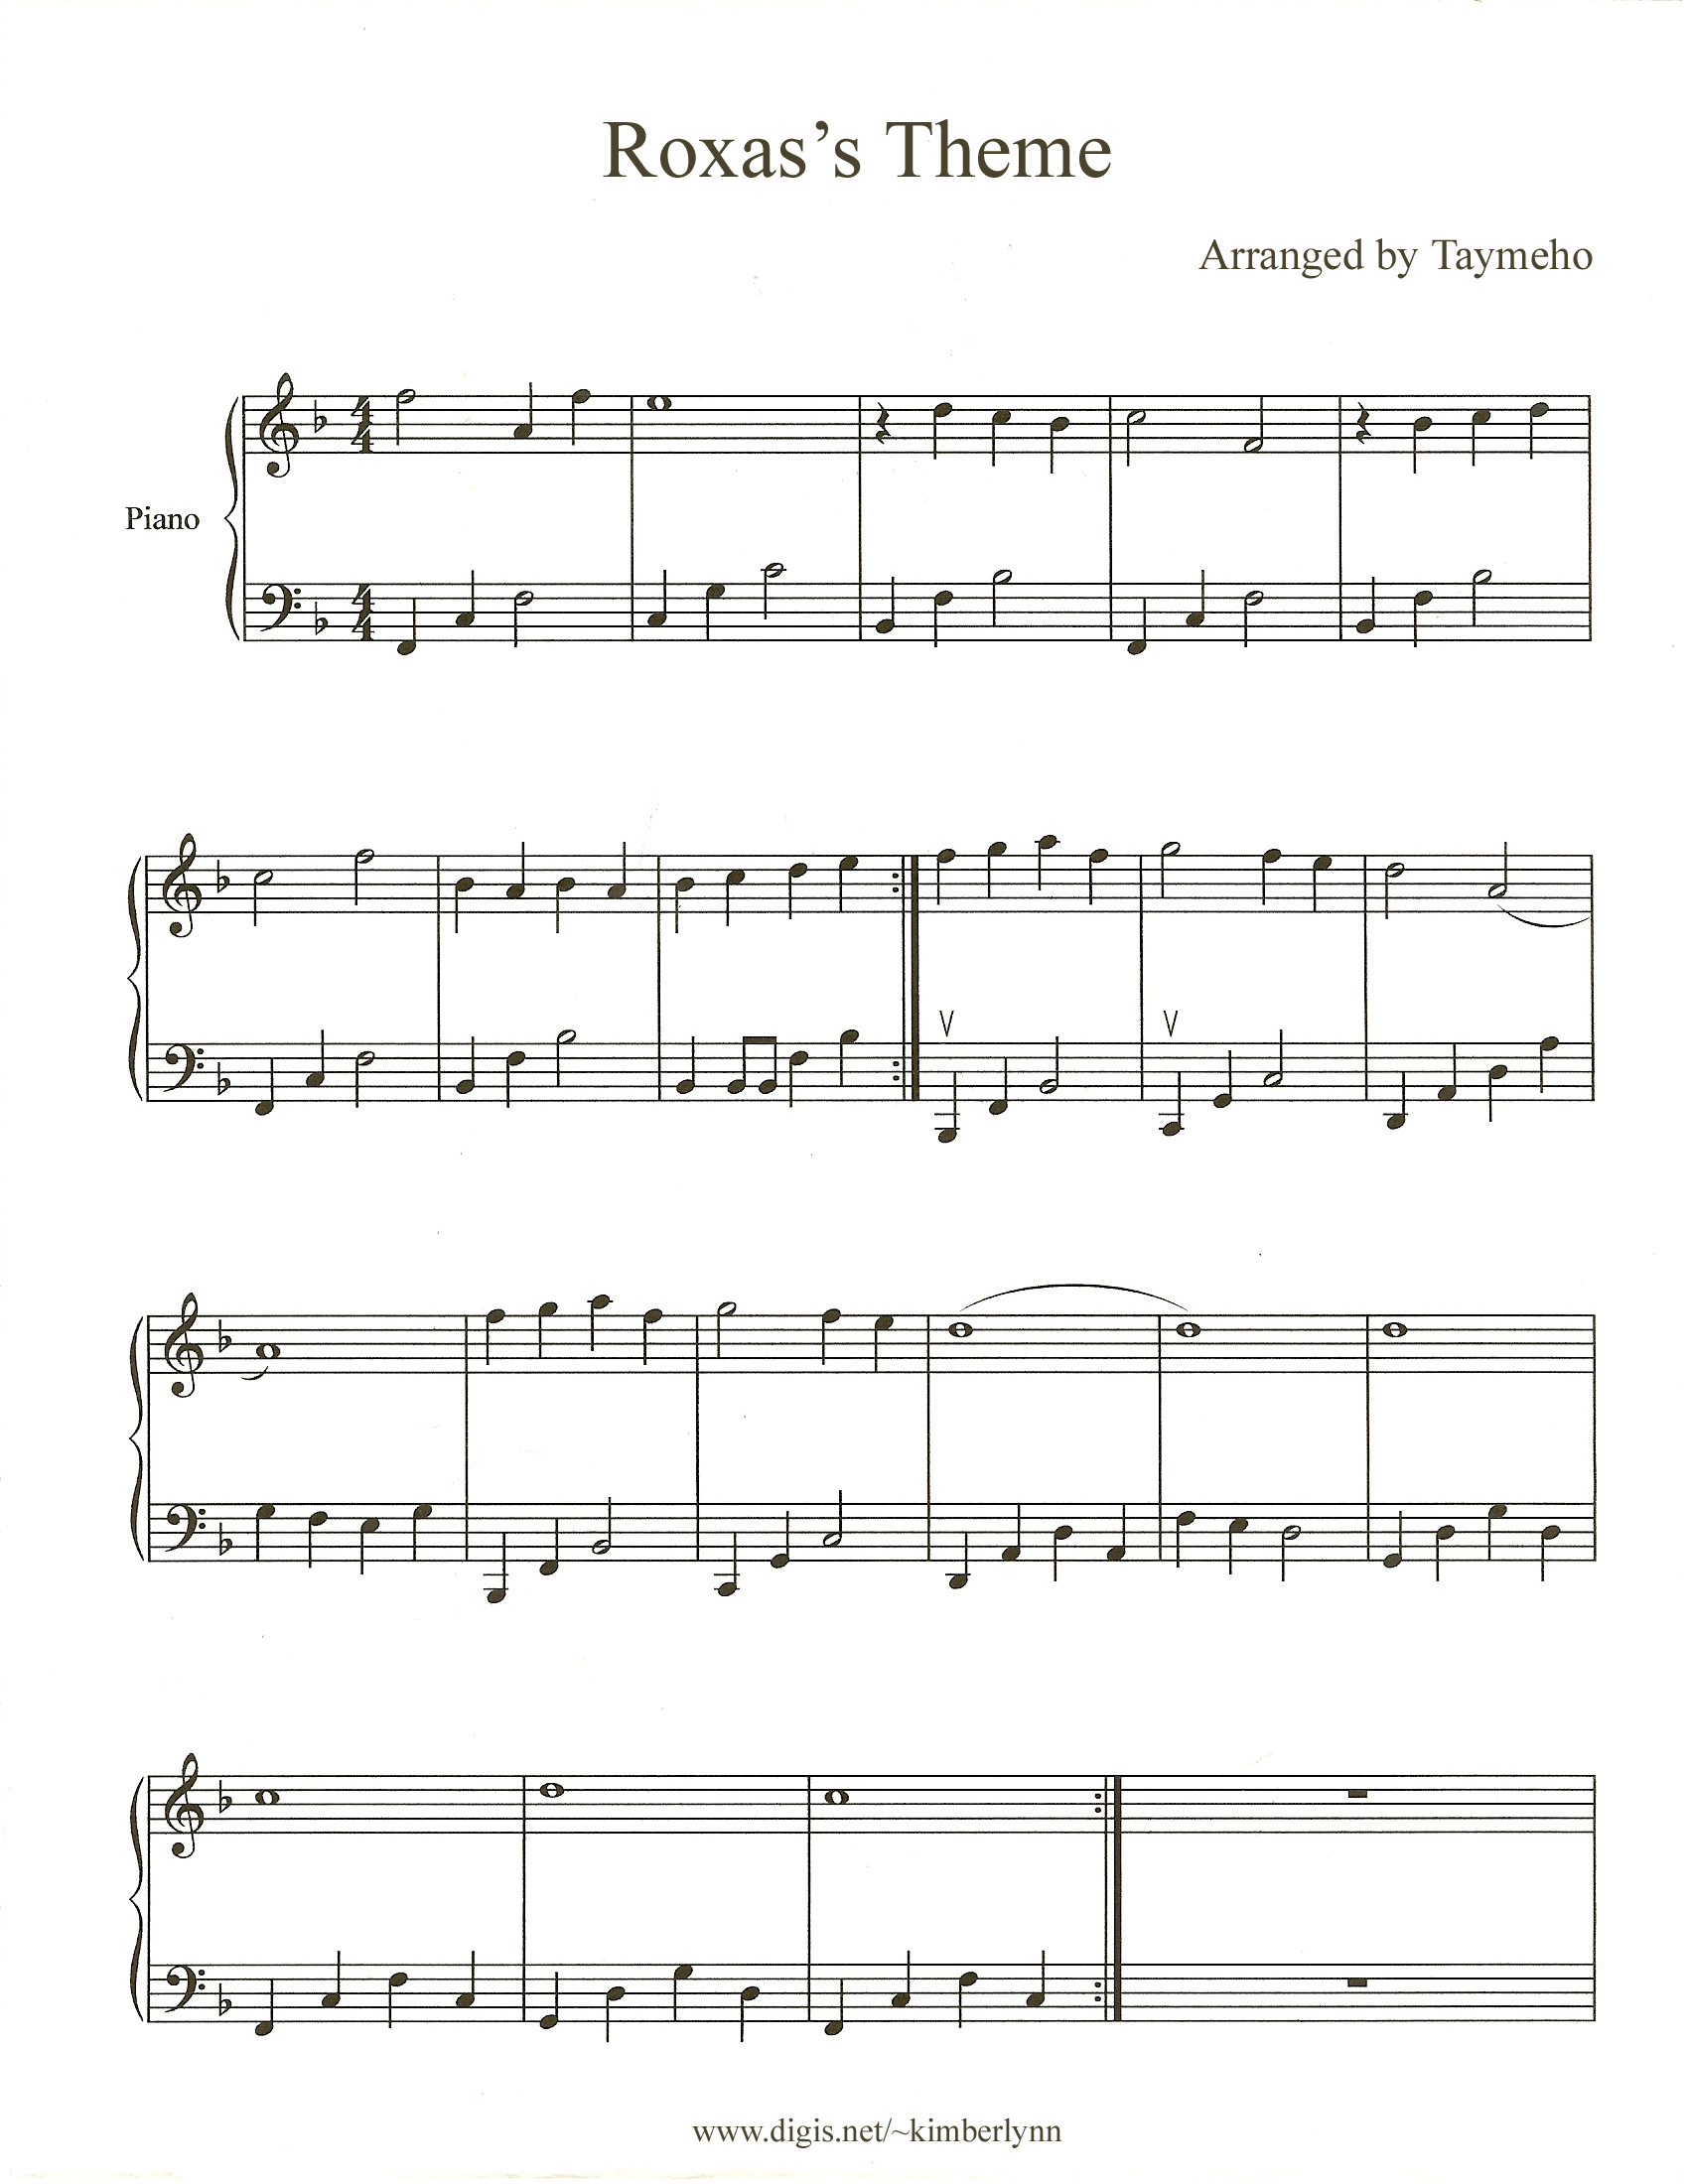 used-yamaha-u2-piano-keyboard-and-mouse-usb-not-working-5s-free-piano-sheet-music-70-s-yamaha